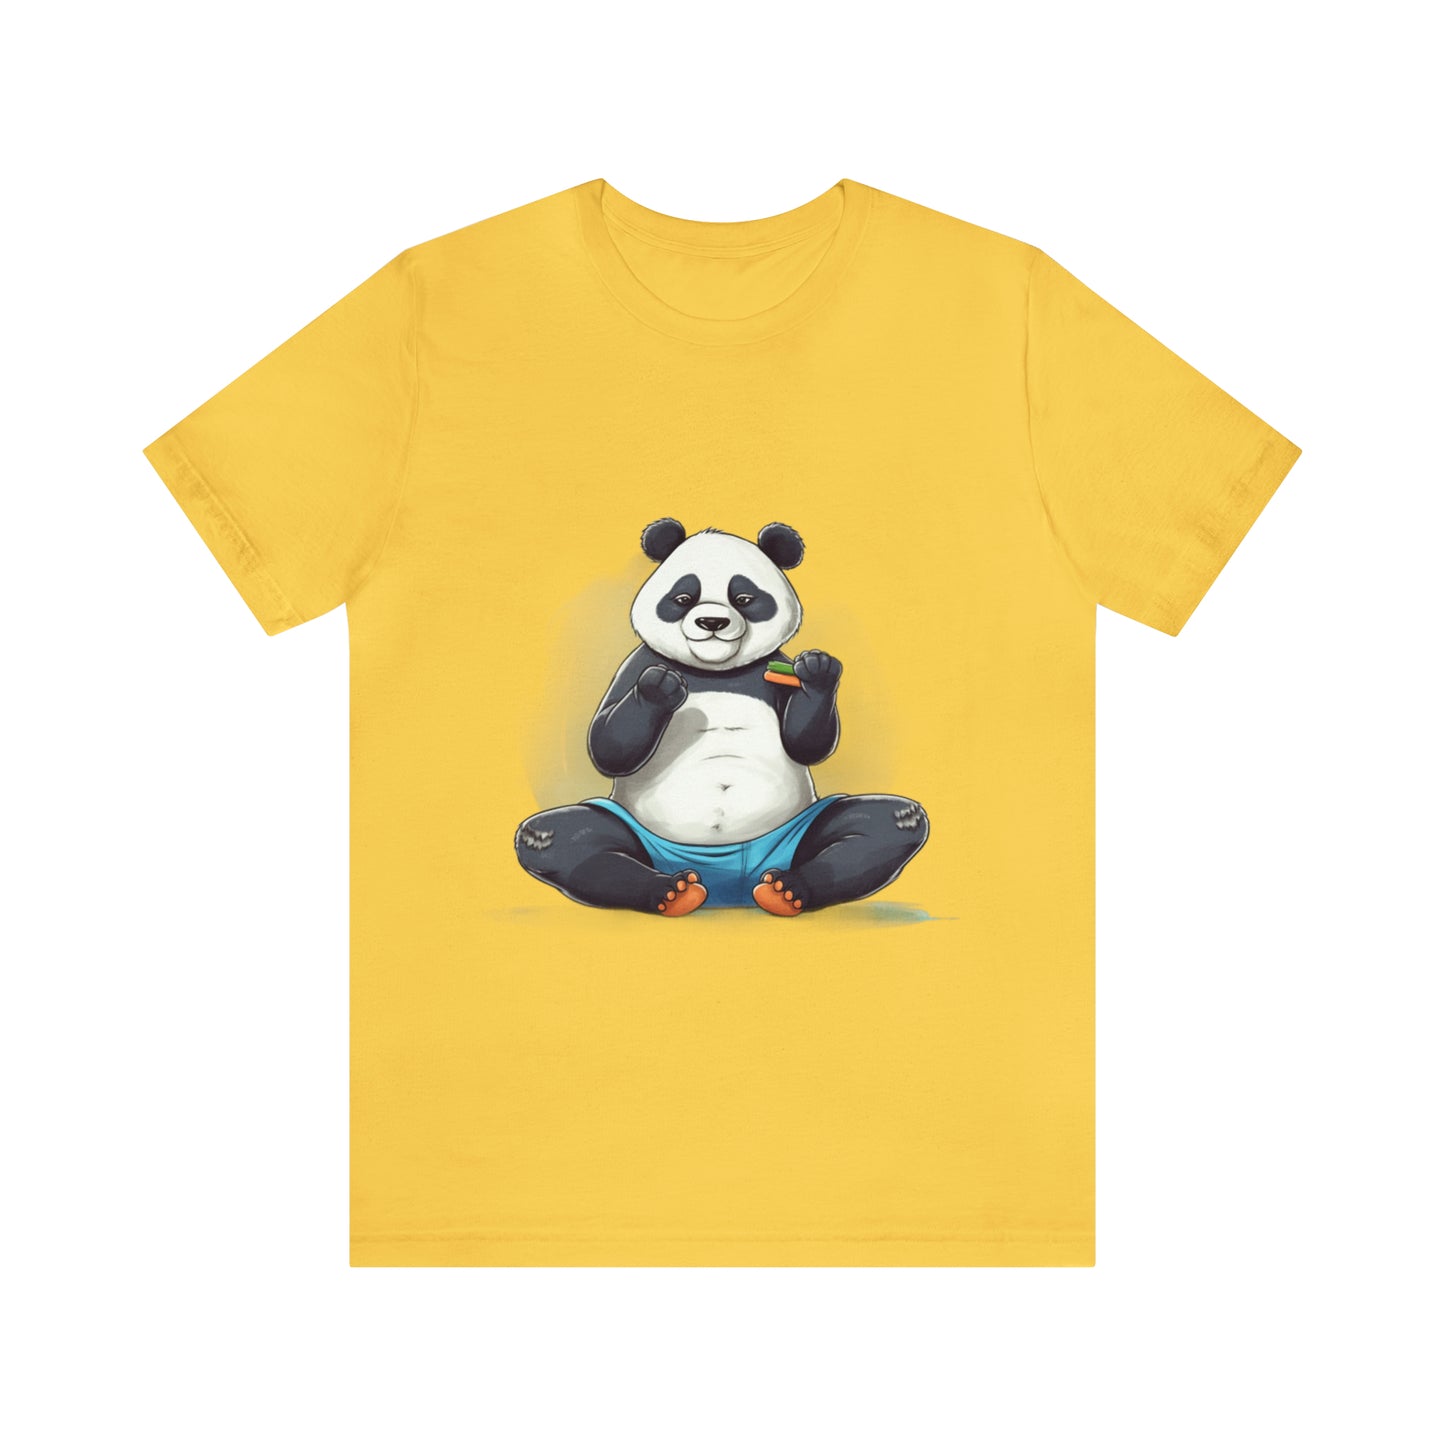 Panda Power Yoga Tee!